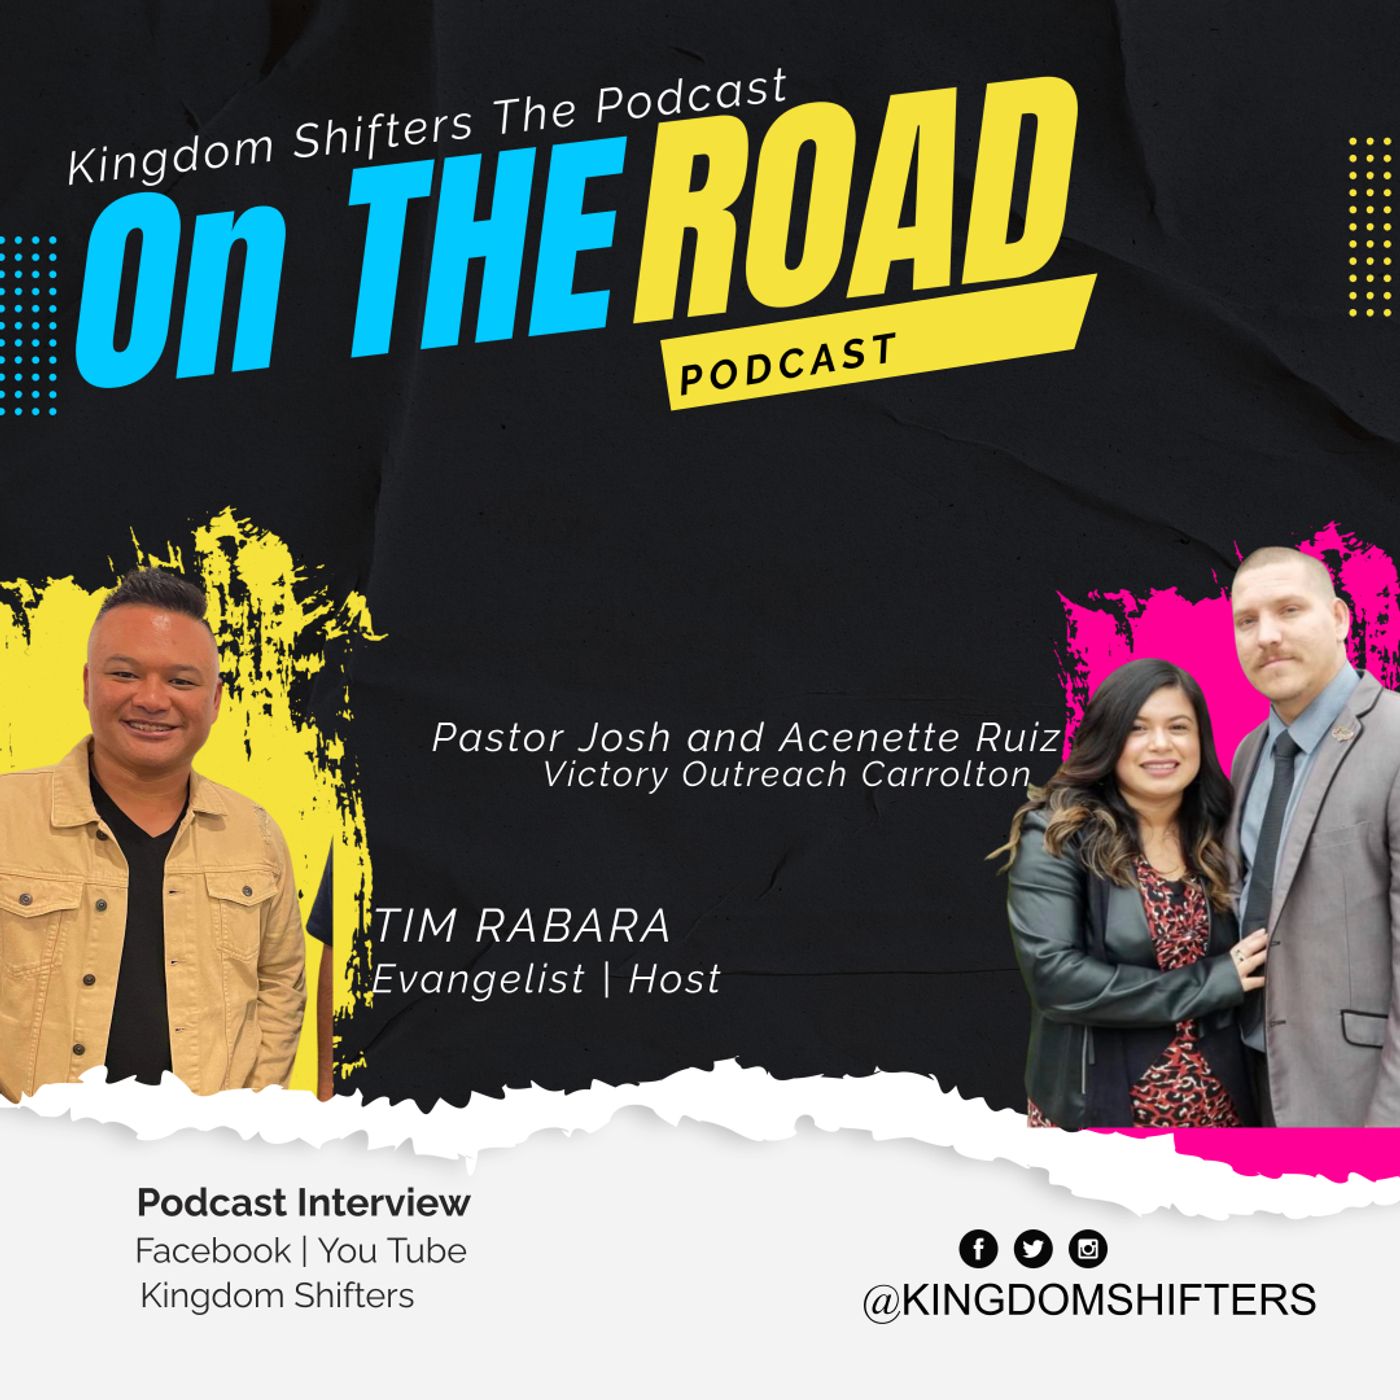 Kingdom Shifters The Podcast On The Road with Evangelist Tim Rabara, Josh Acenette Ruiz